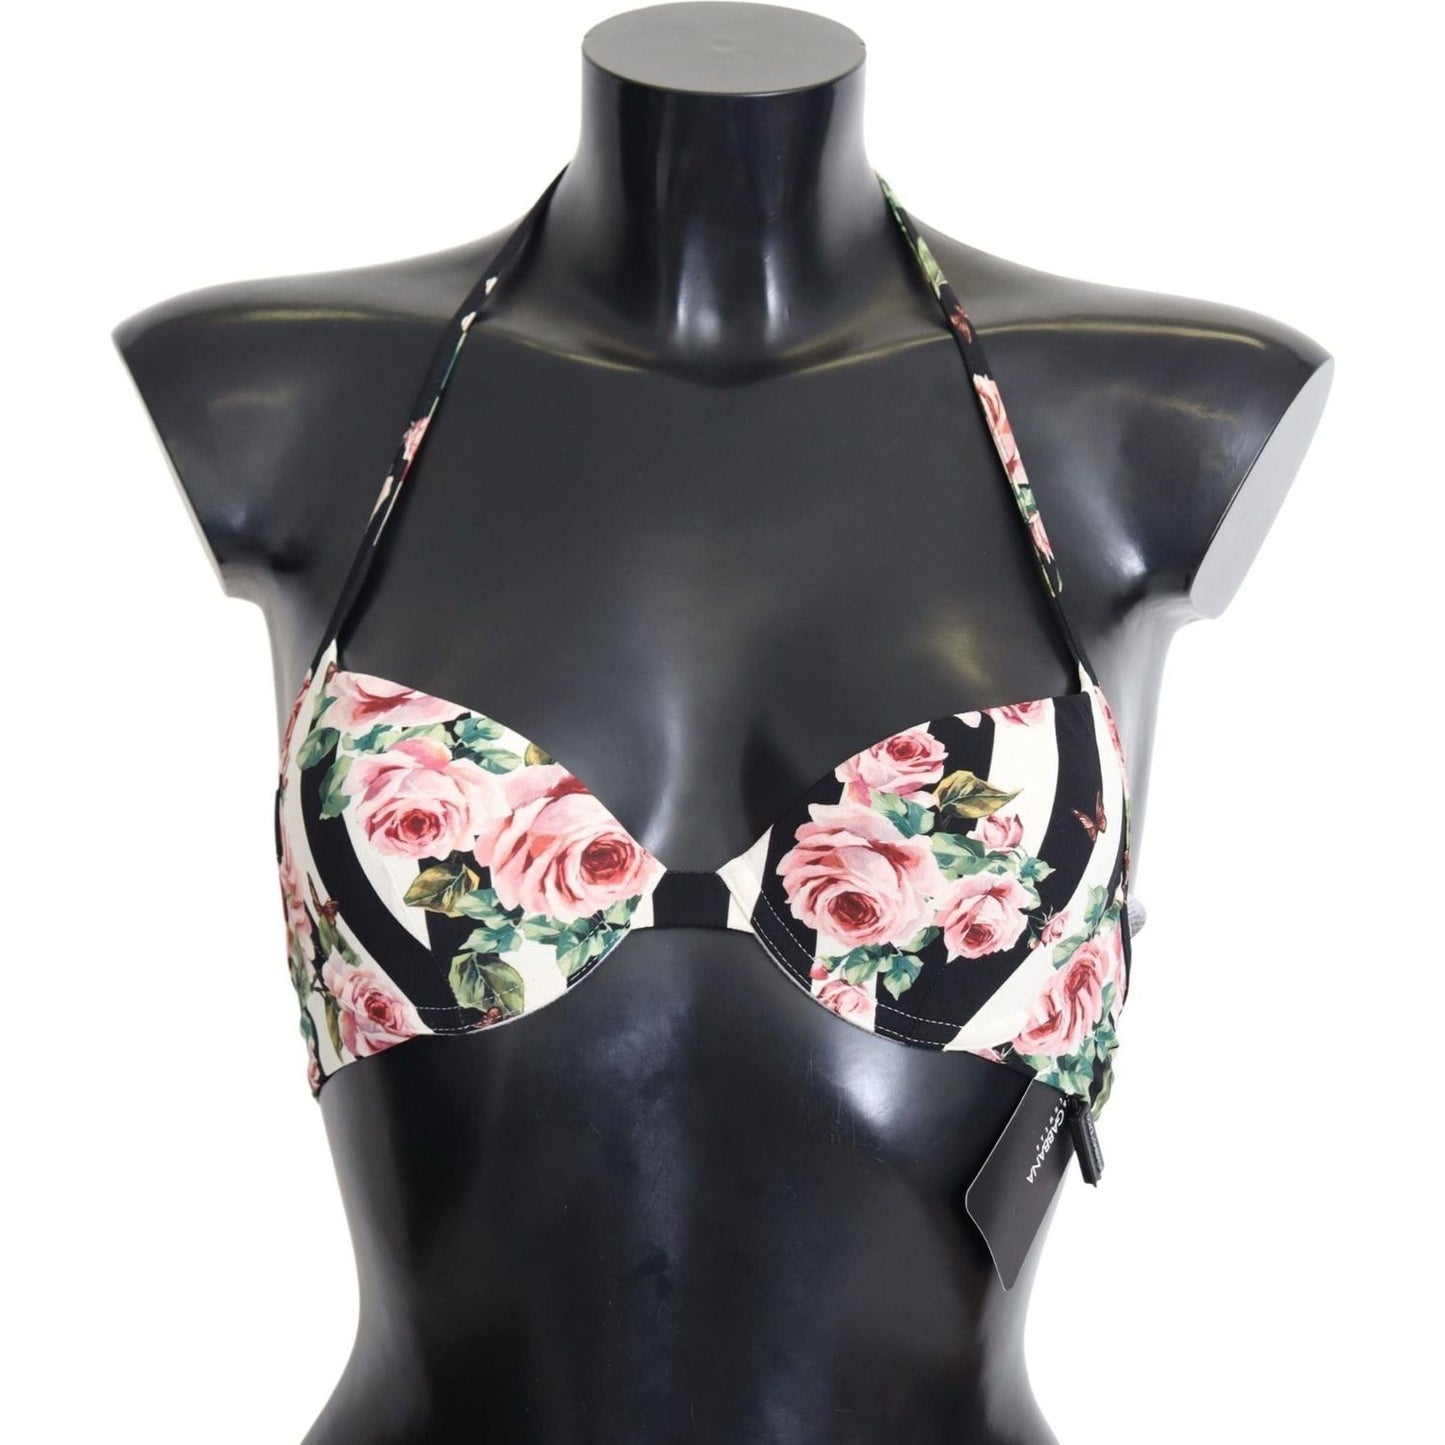 Dolce & Gabbana Elegant Rose Print Bikini Top multicolor-striped-rose-print-swimwear-bikini-tops IMG_5107-scaled-0ca841f9-c7a.jpg